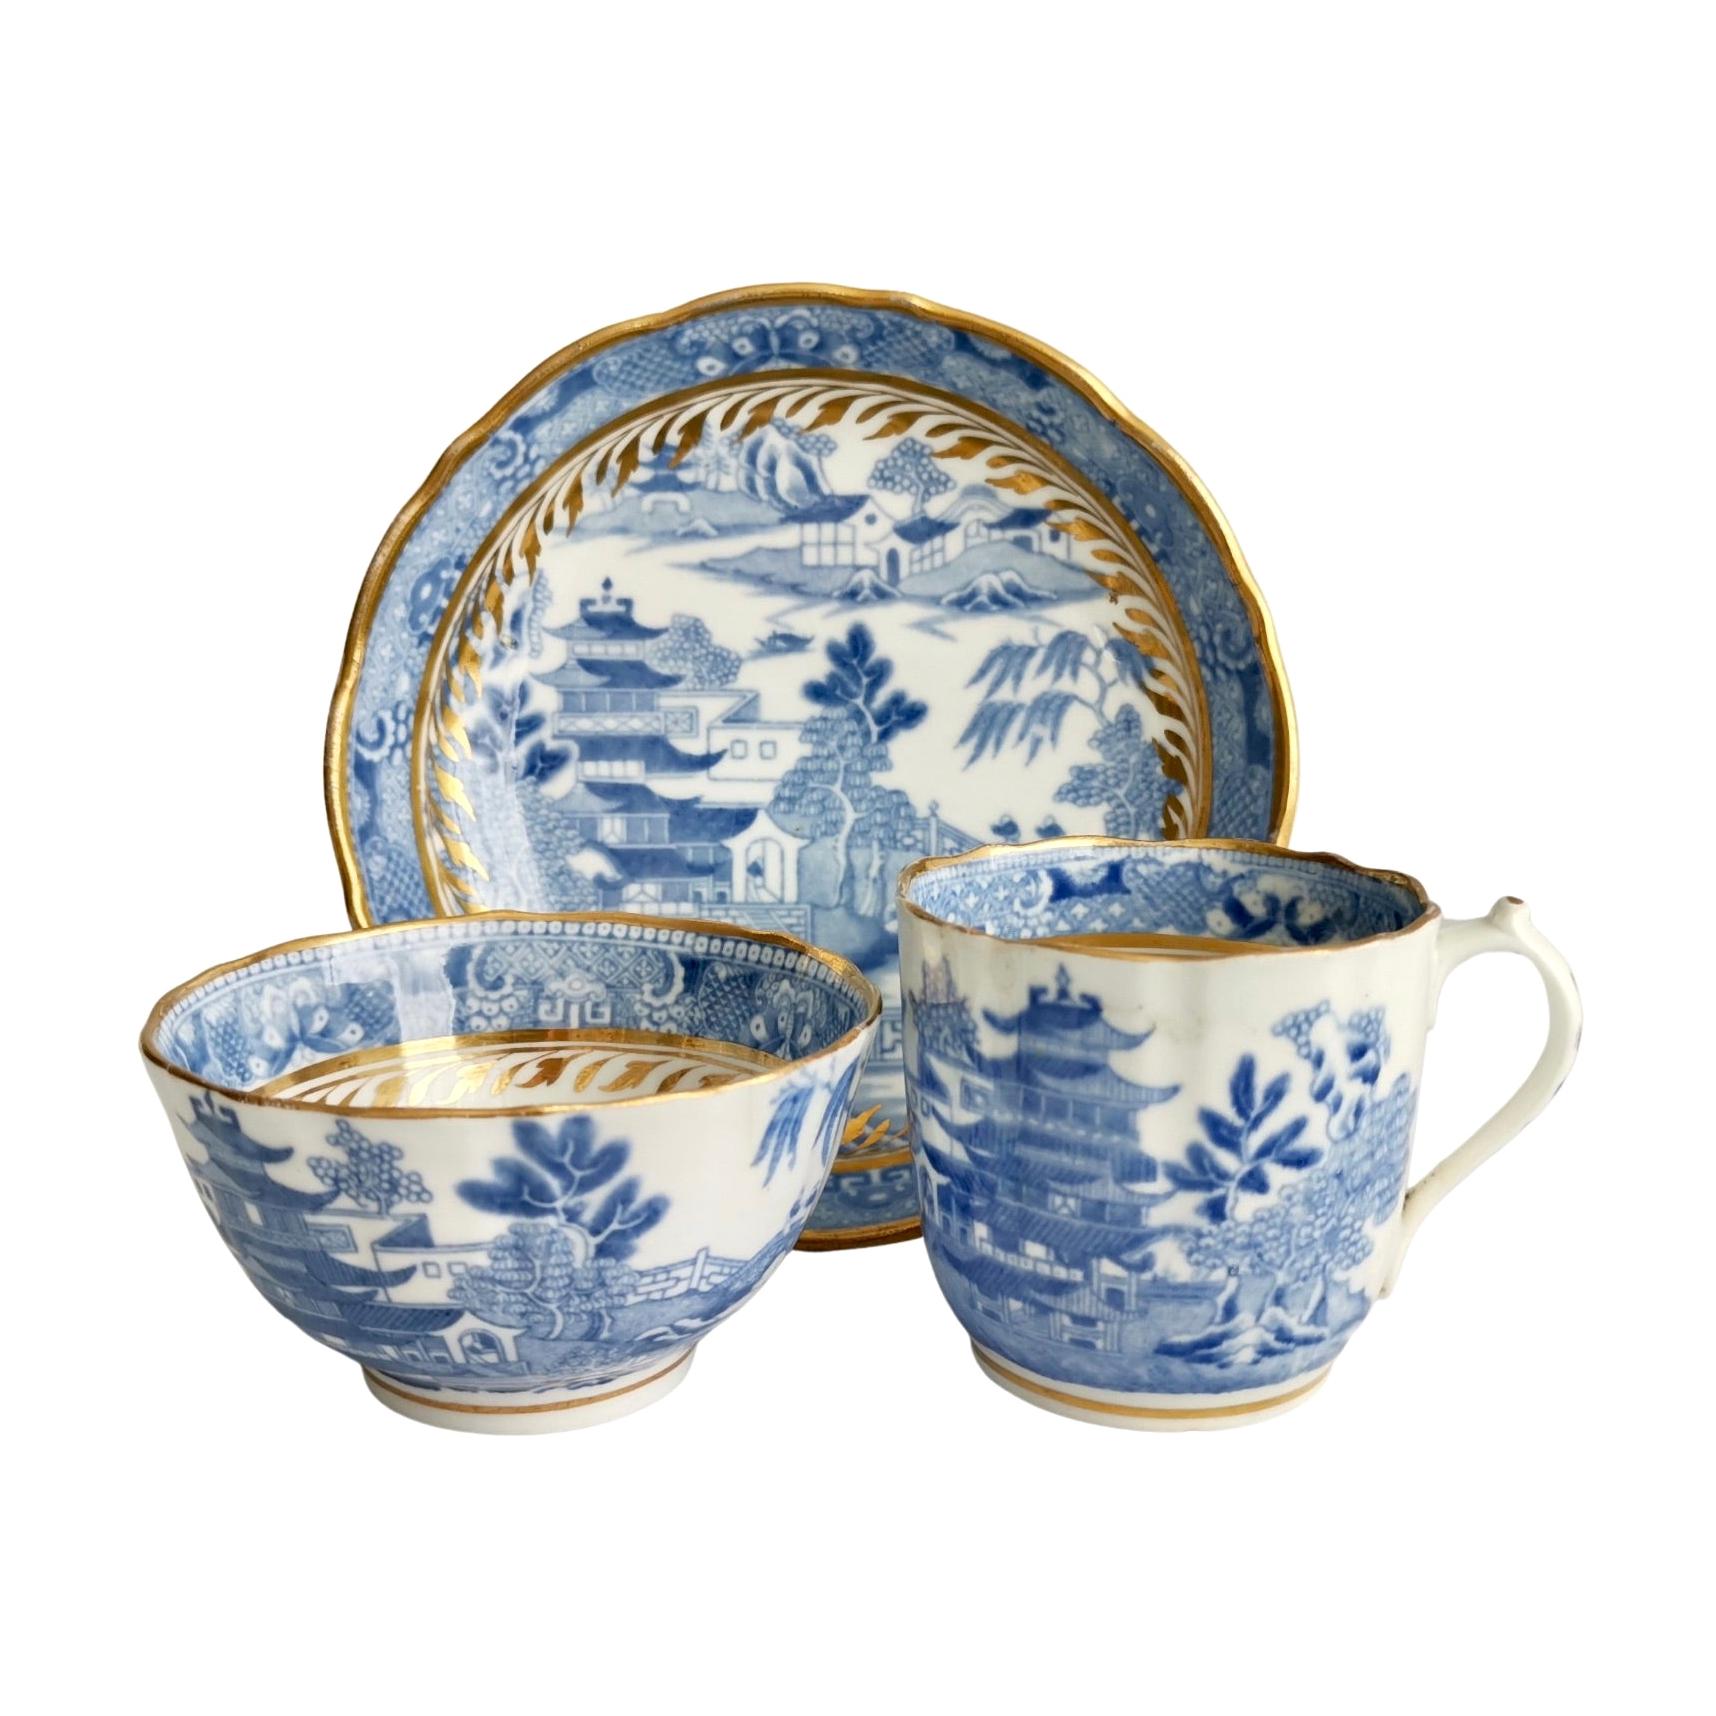 Miles Mason Porcelain Teacup Trio, Pagoda Pattern Blue White Transfer, ca 1810